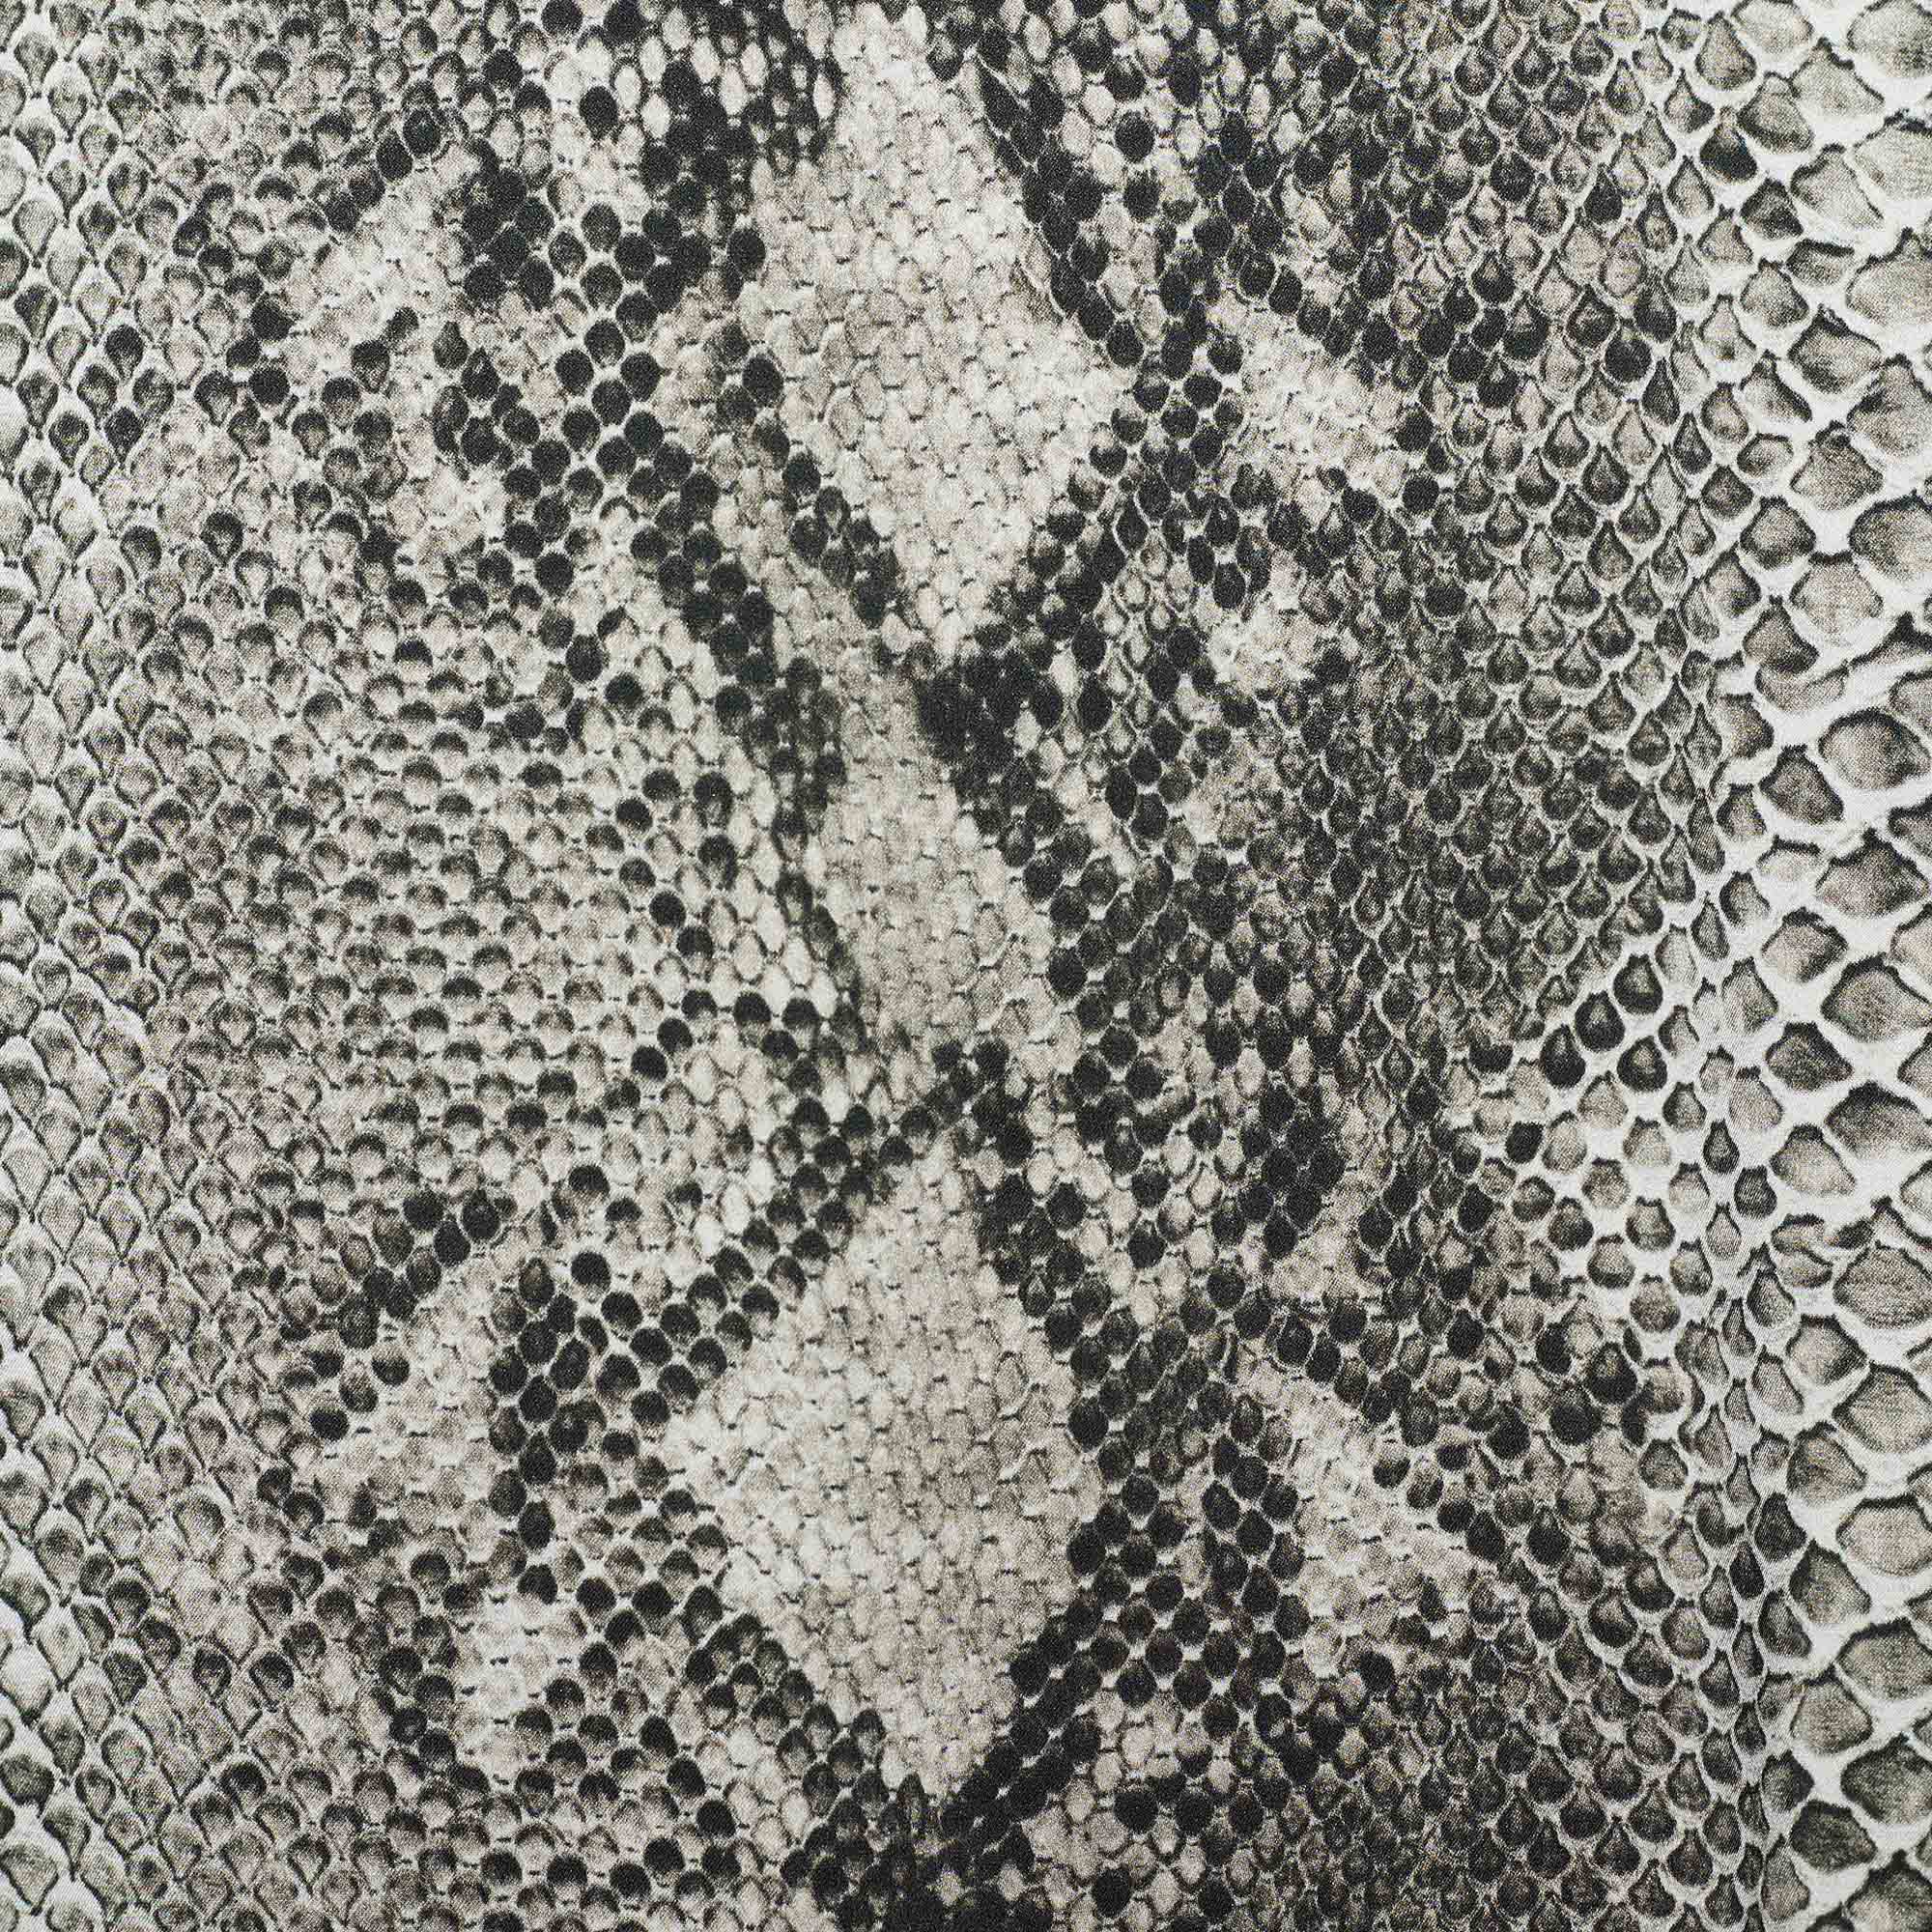 Stella McCartney Grey Snakeskin Print Silk Blouse M